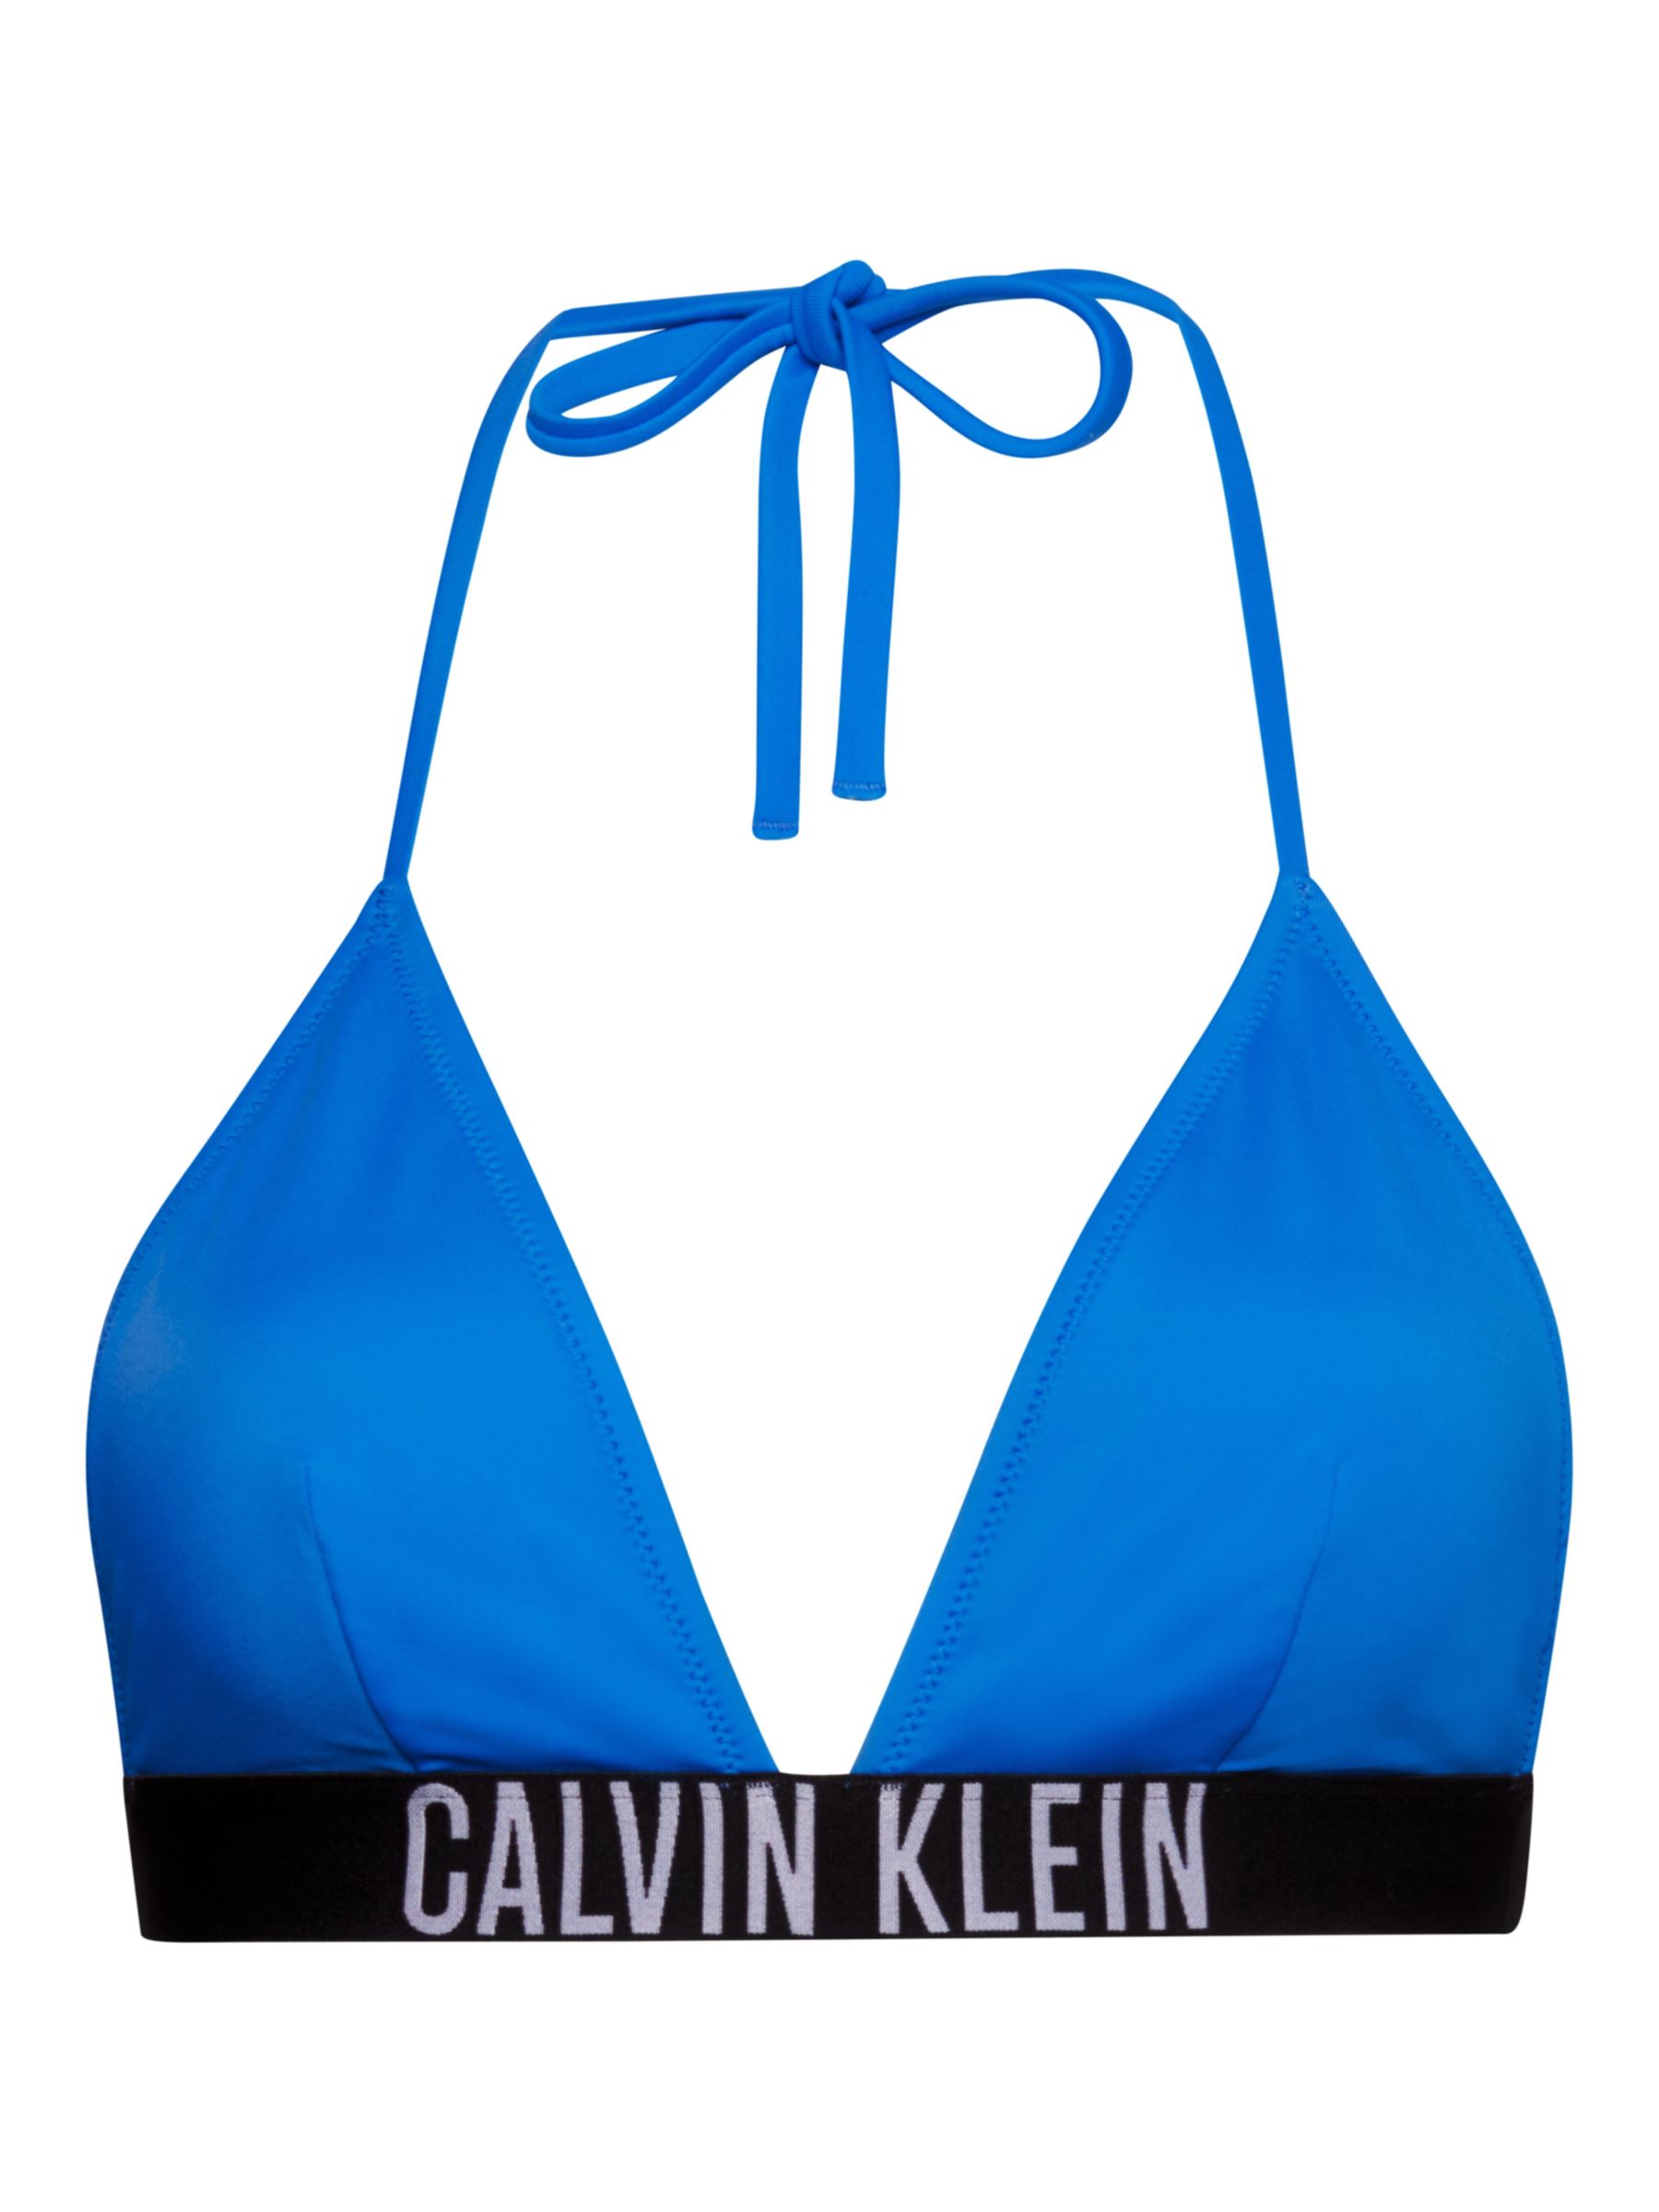 Calvin Klein Intense Power Triangle Bikini Top, Dynamic Blue, S